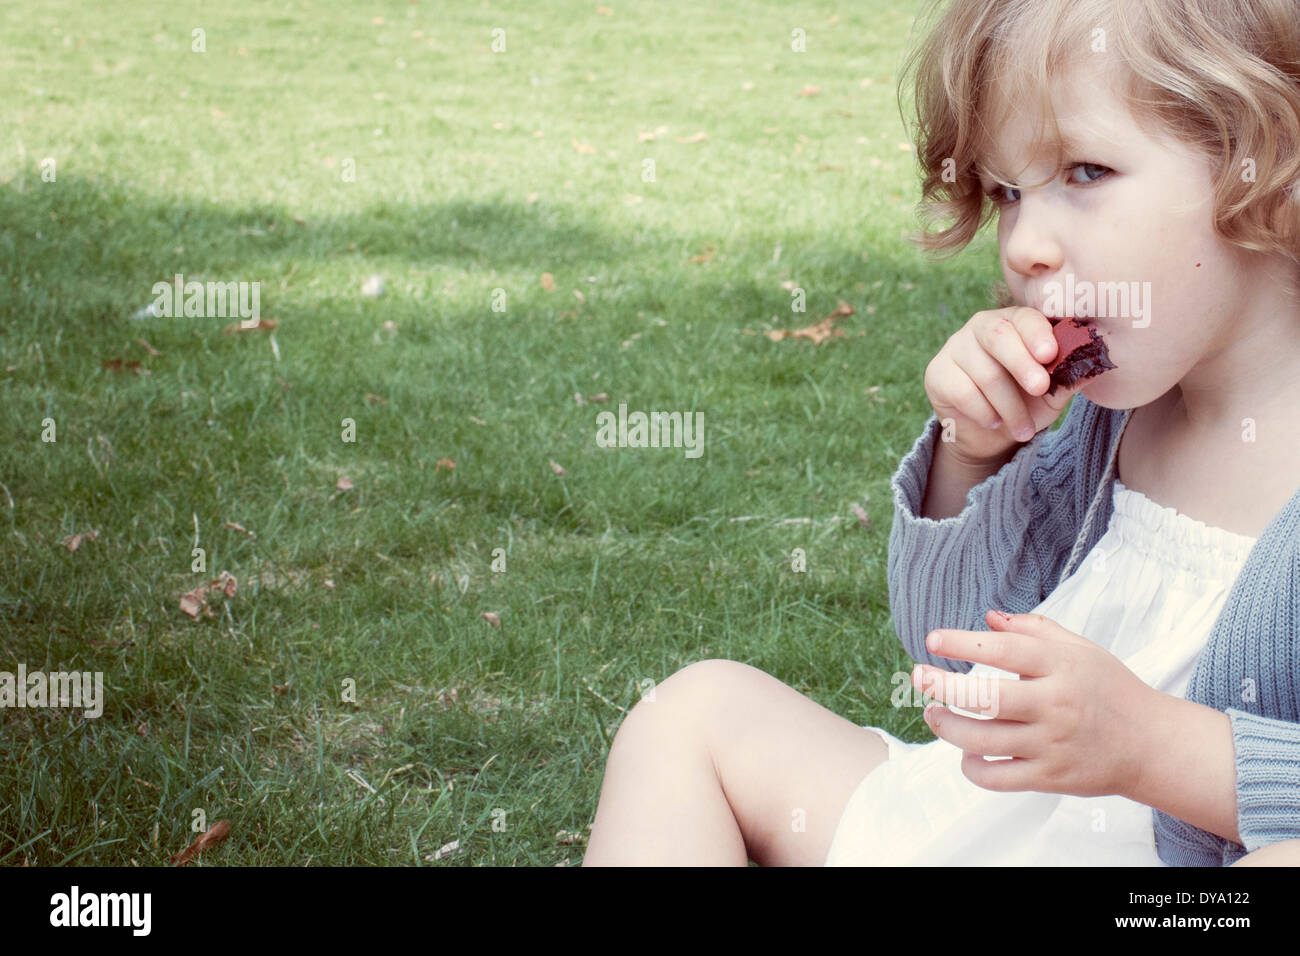 Little girl eating sweet snack outdoors Stock Photo